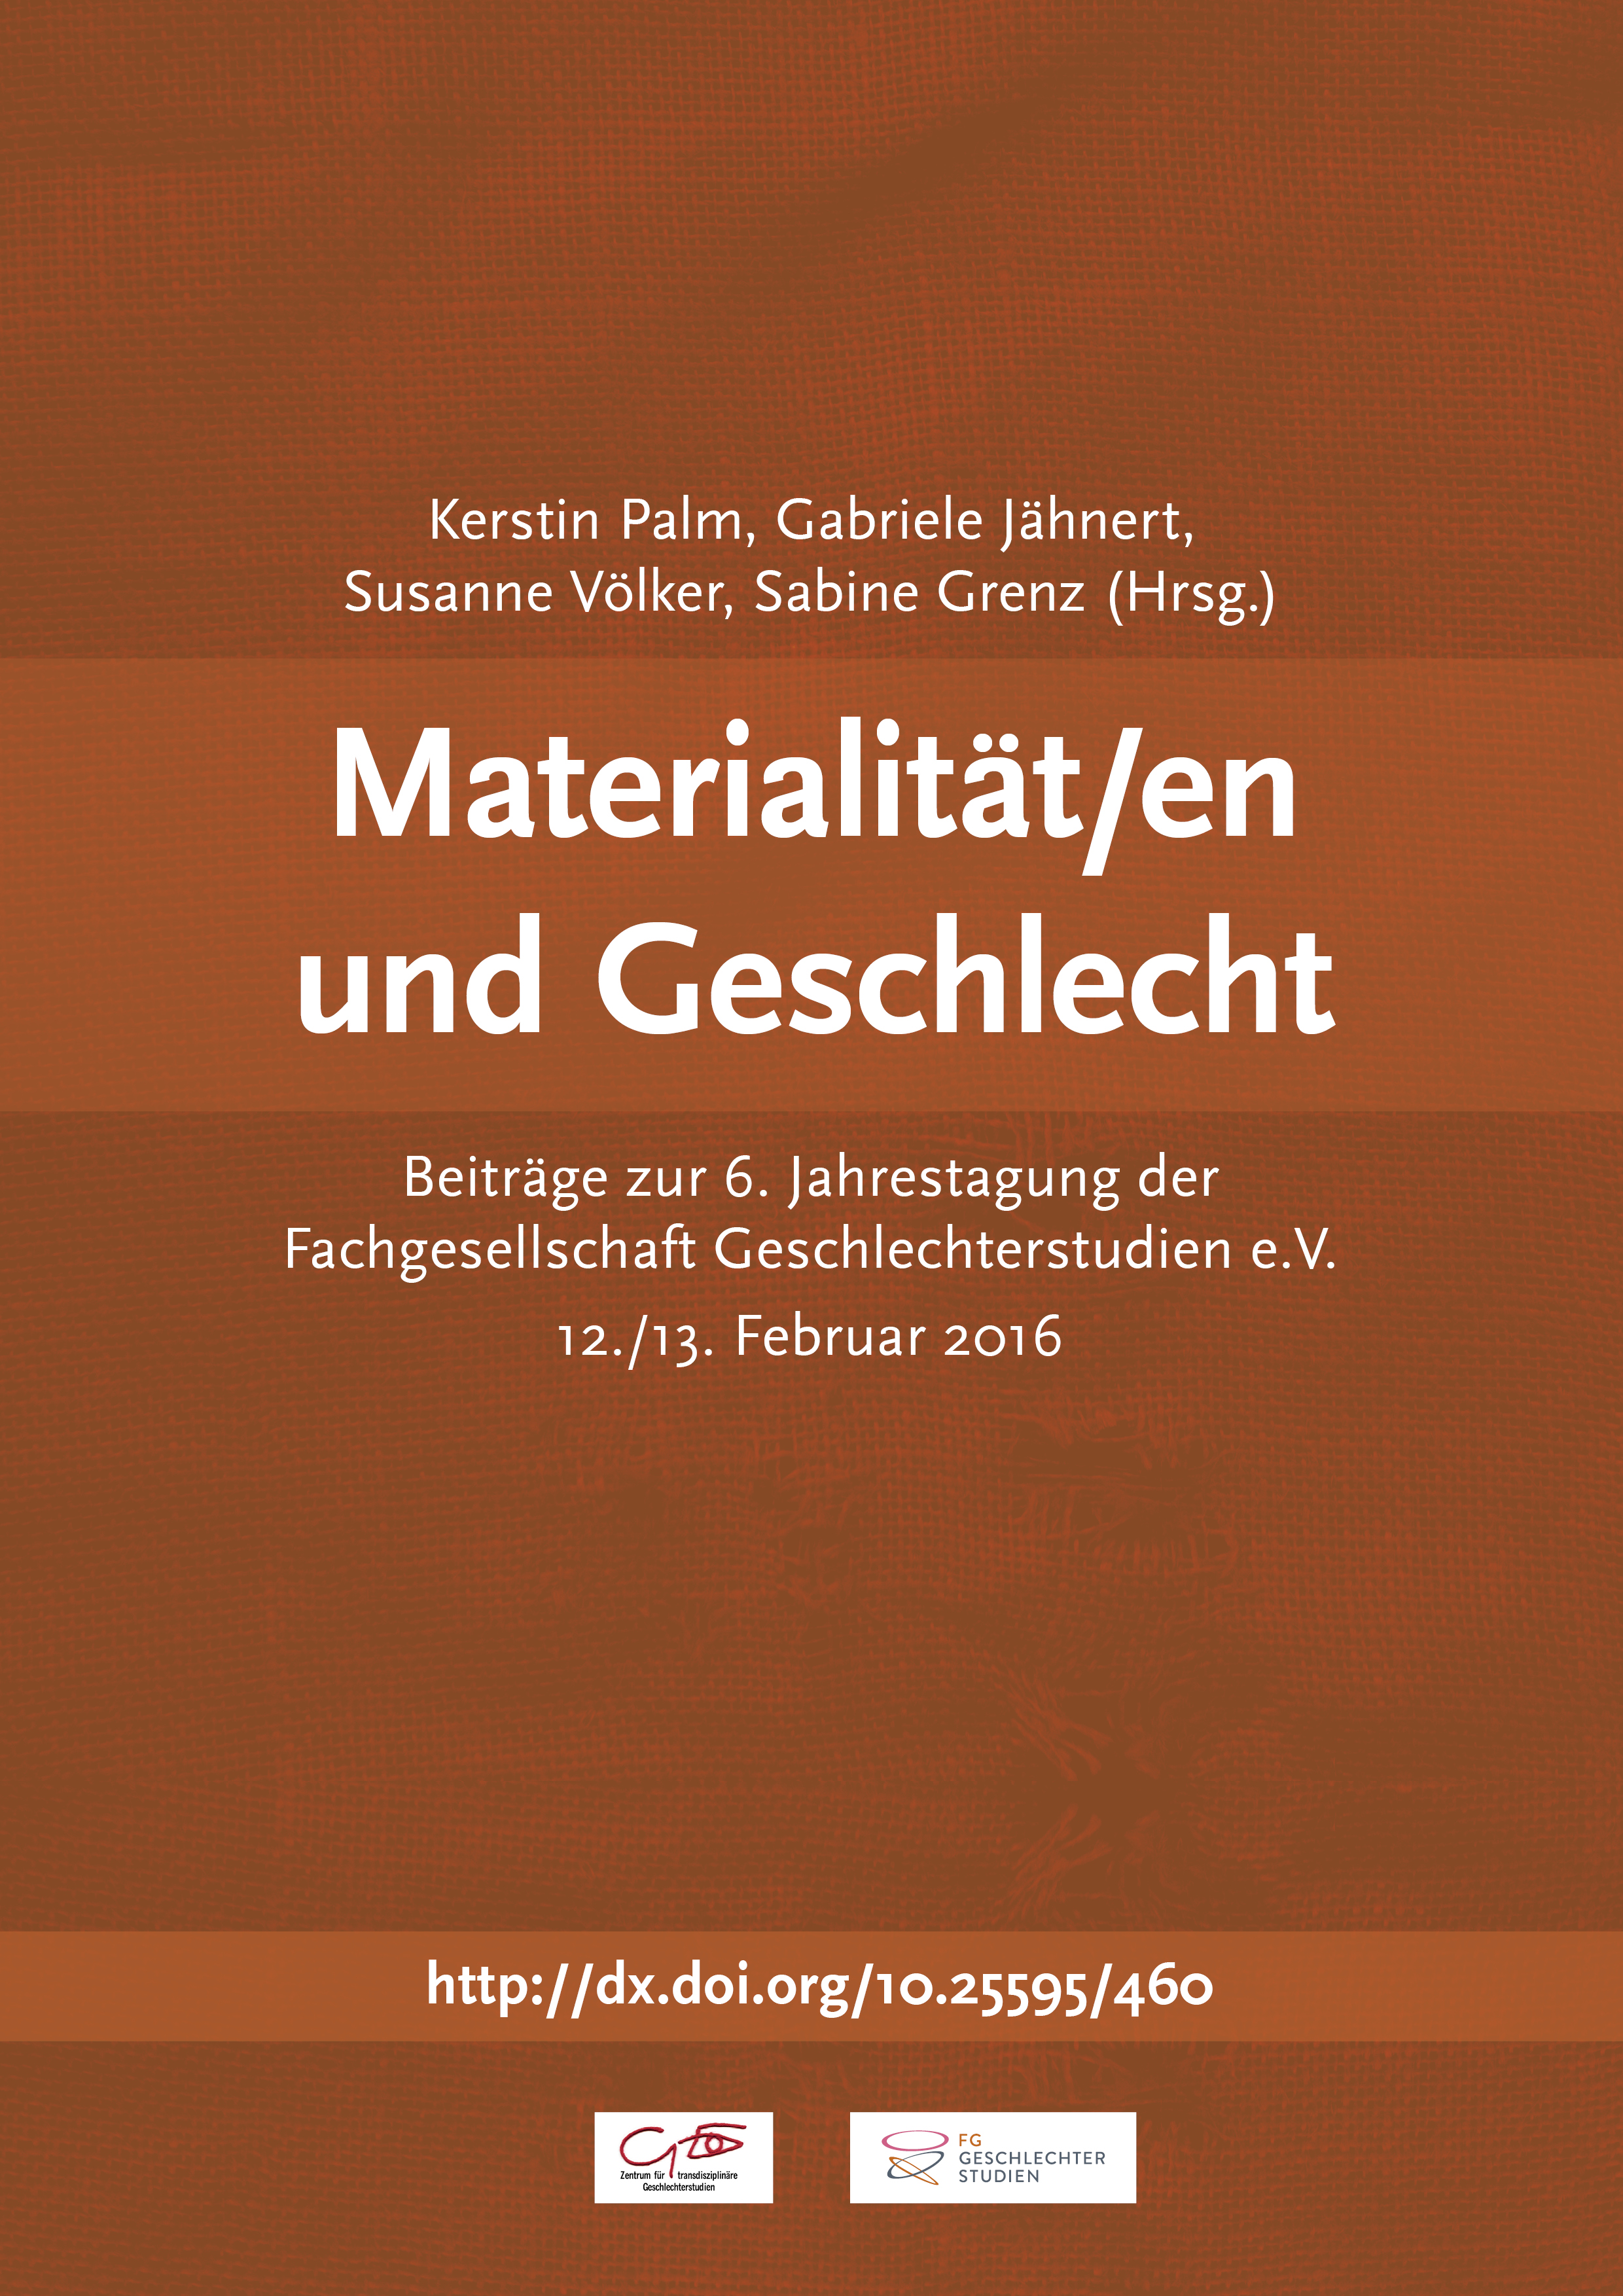 Materialitäten_onlineband_cover_rgb.jpg